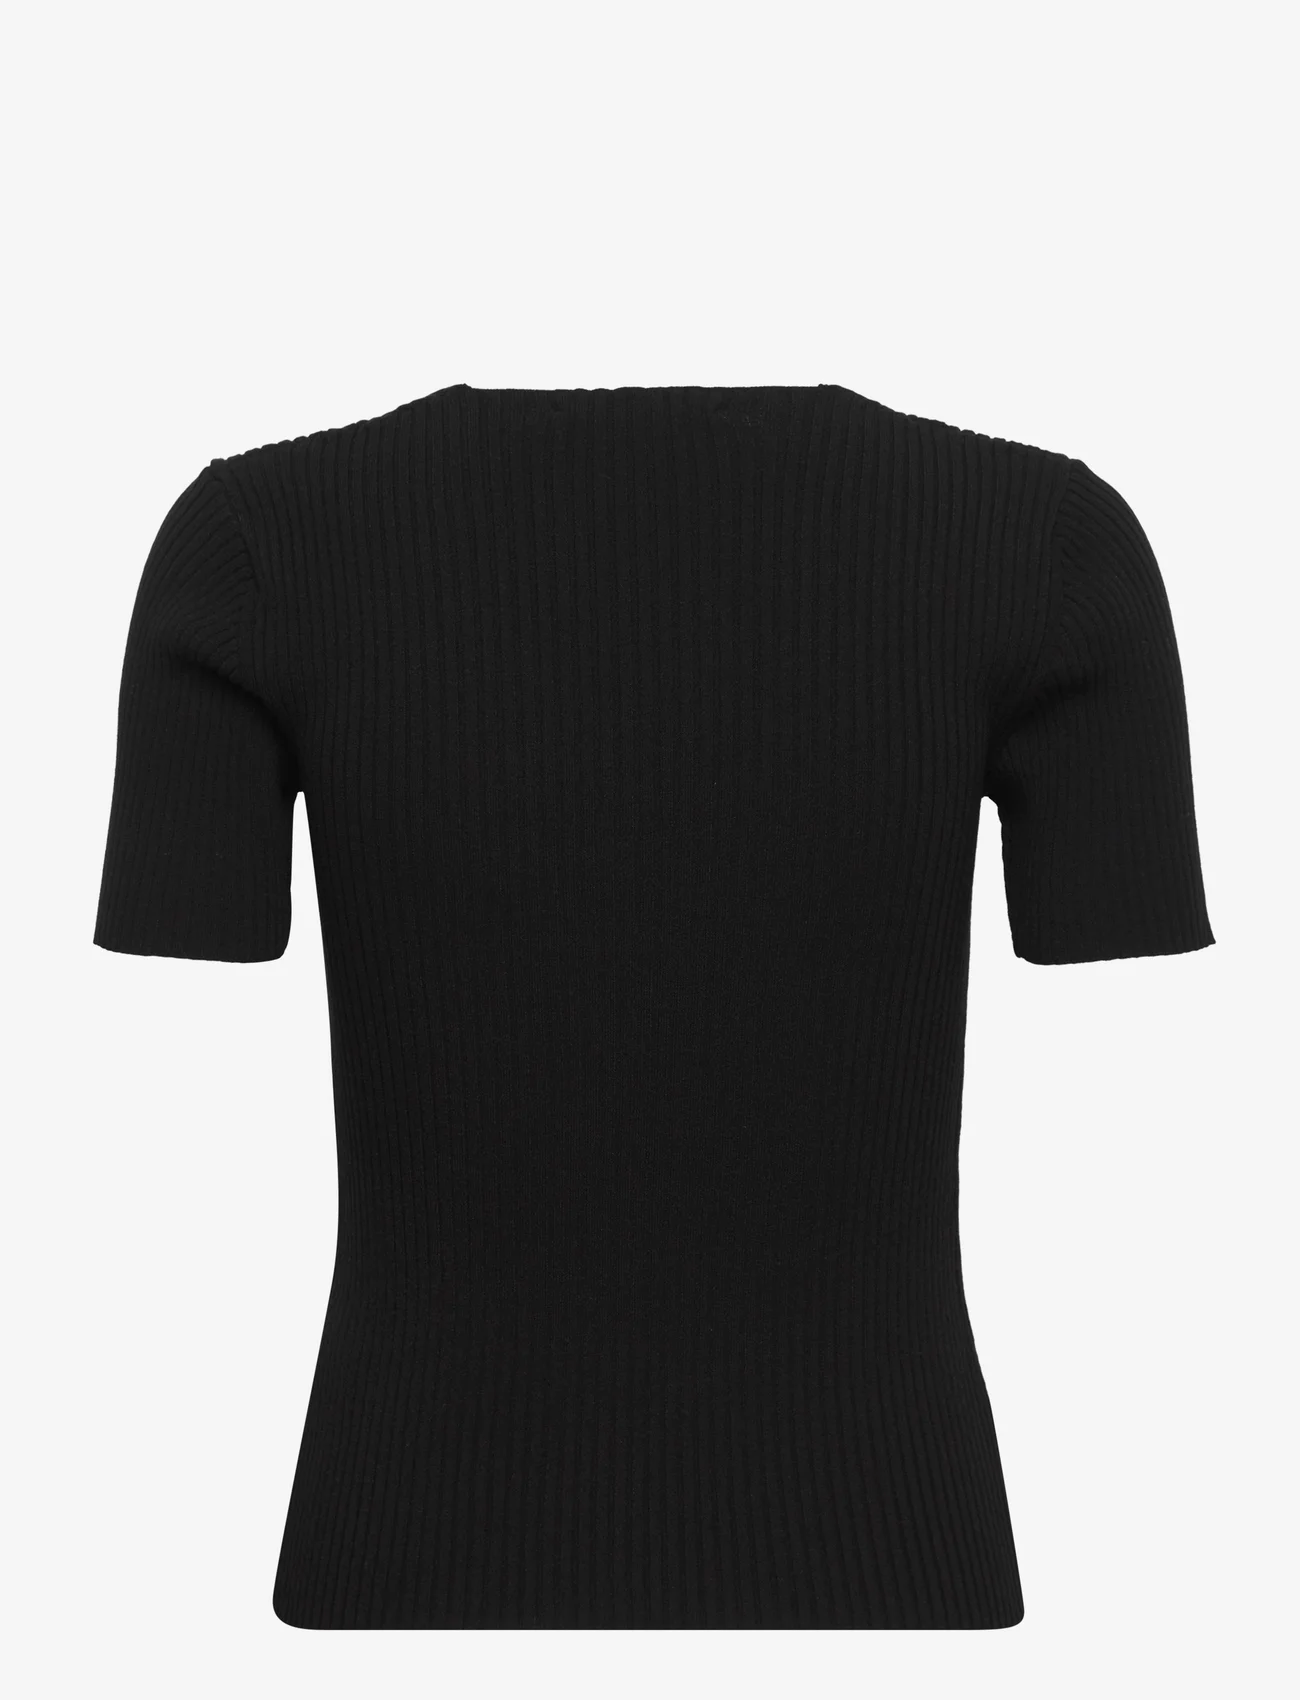 Rabens Saloner - Fabia - Contour knit short slv. top - t-shirts - black - 1